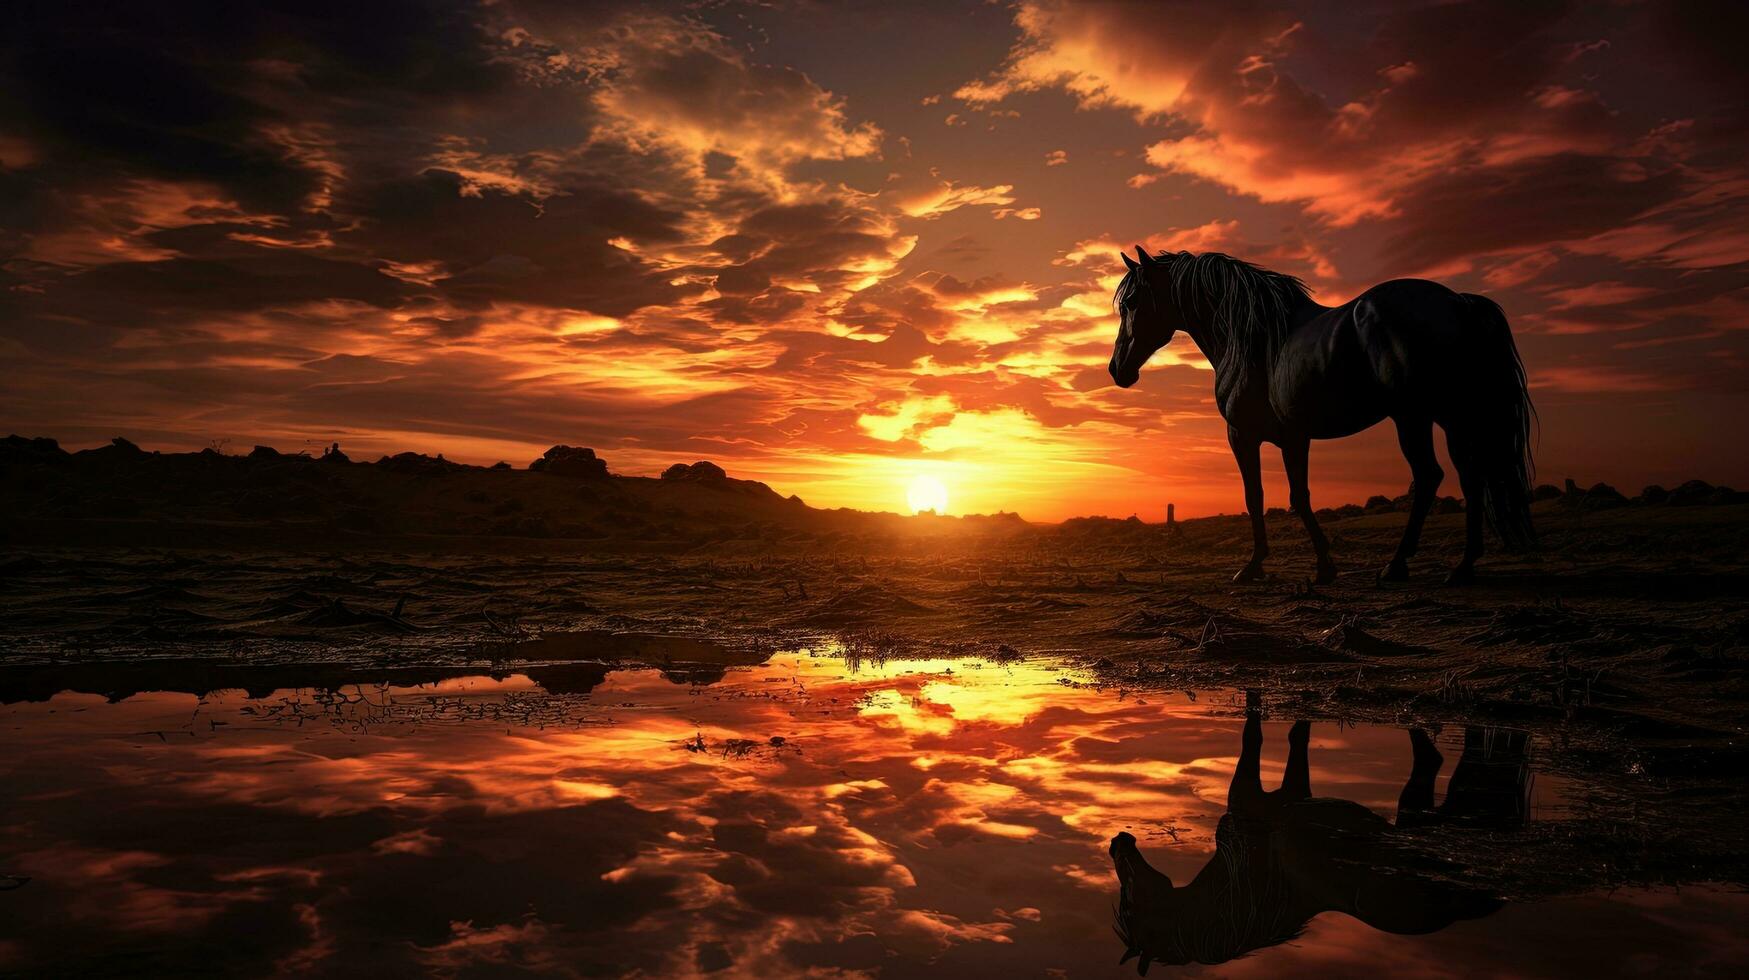 Horizon with equine companion. silhouette concept photo